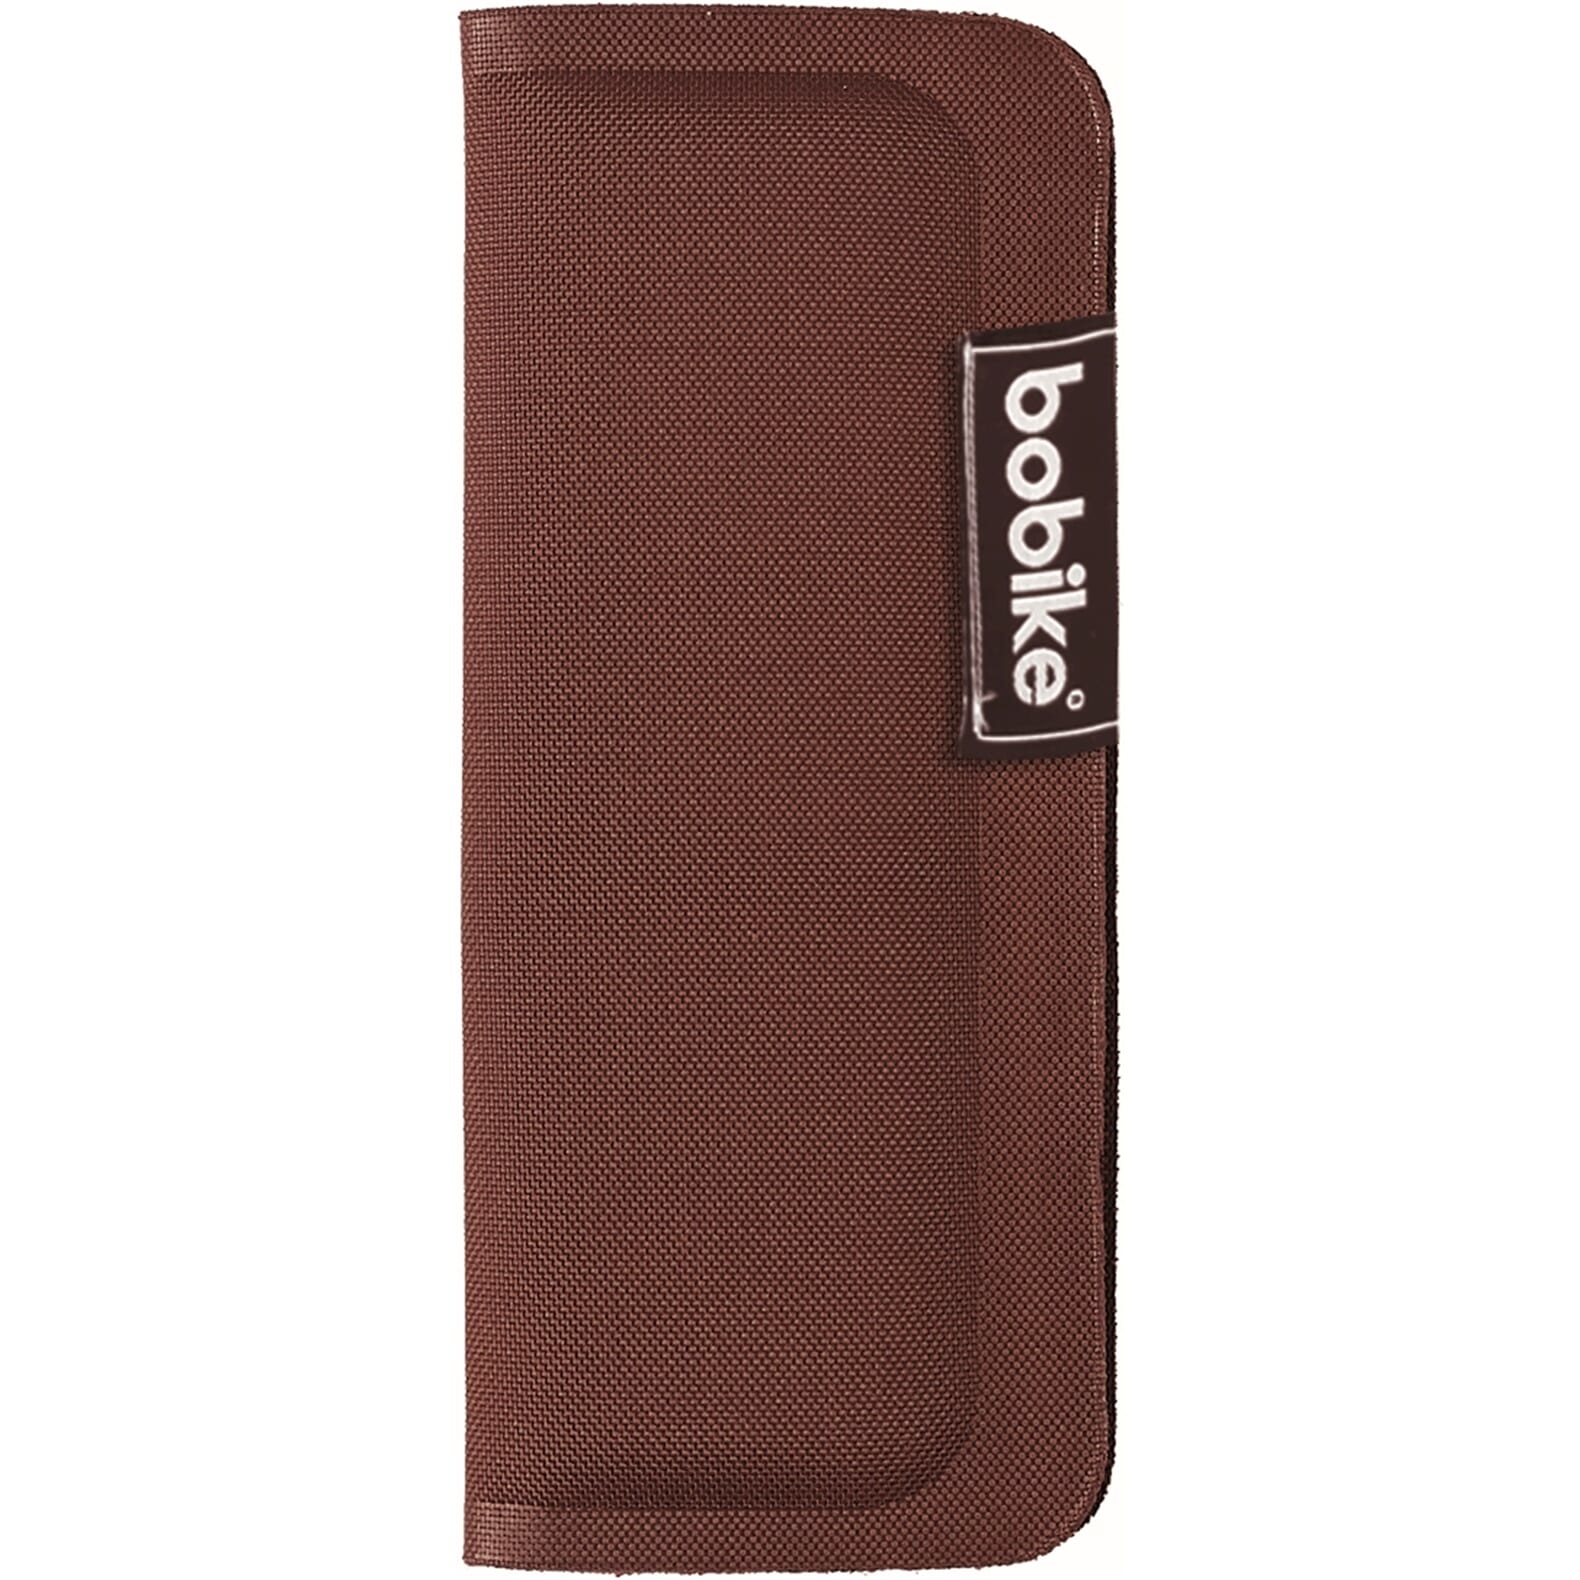 schouder pads Exclusive Plus cinnamon brown